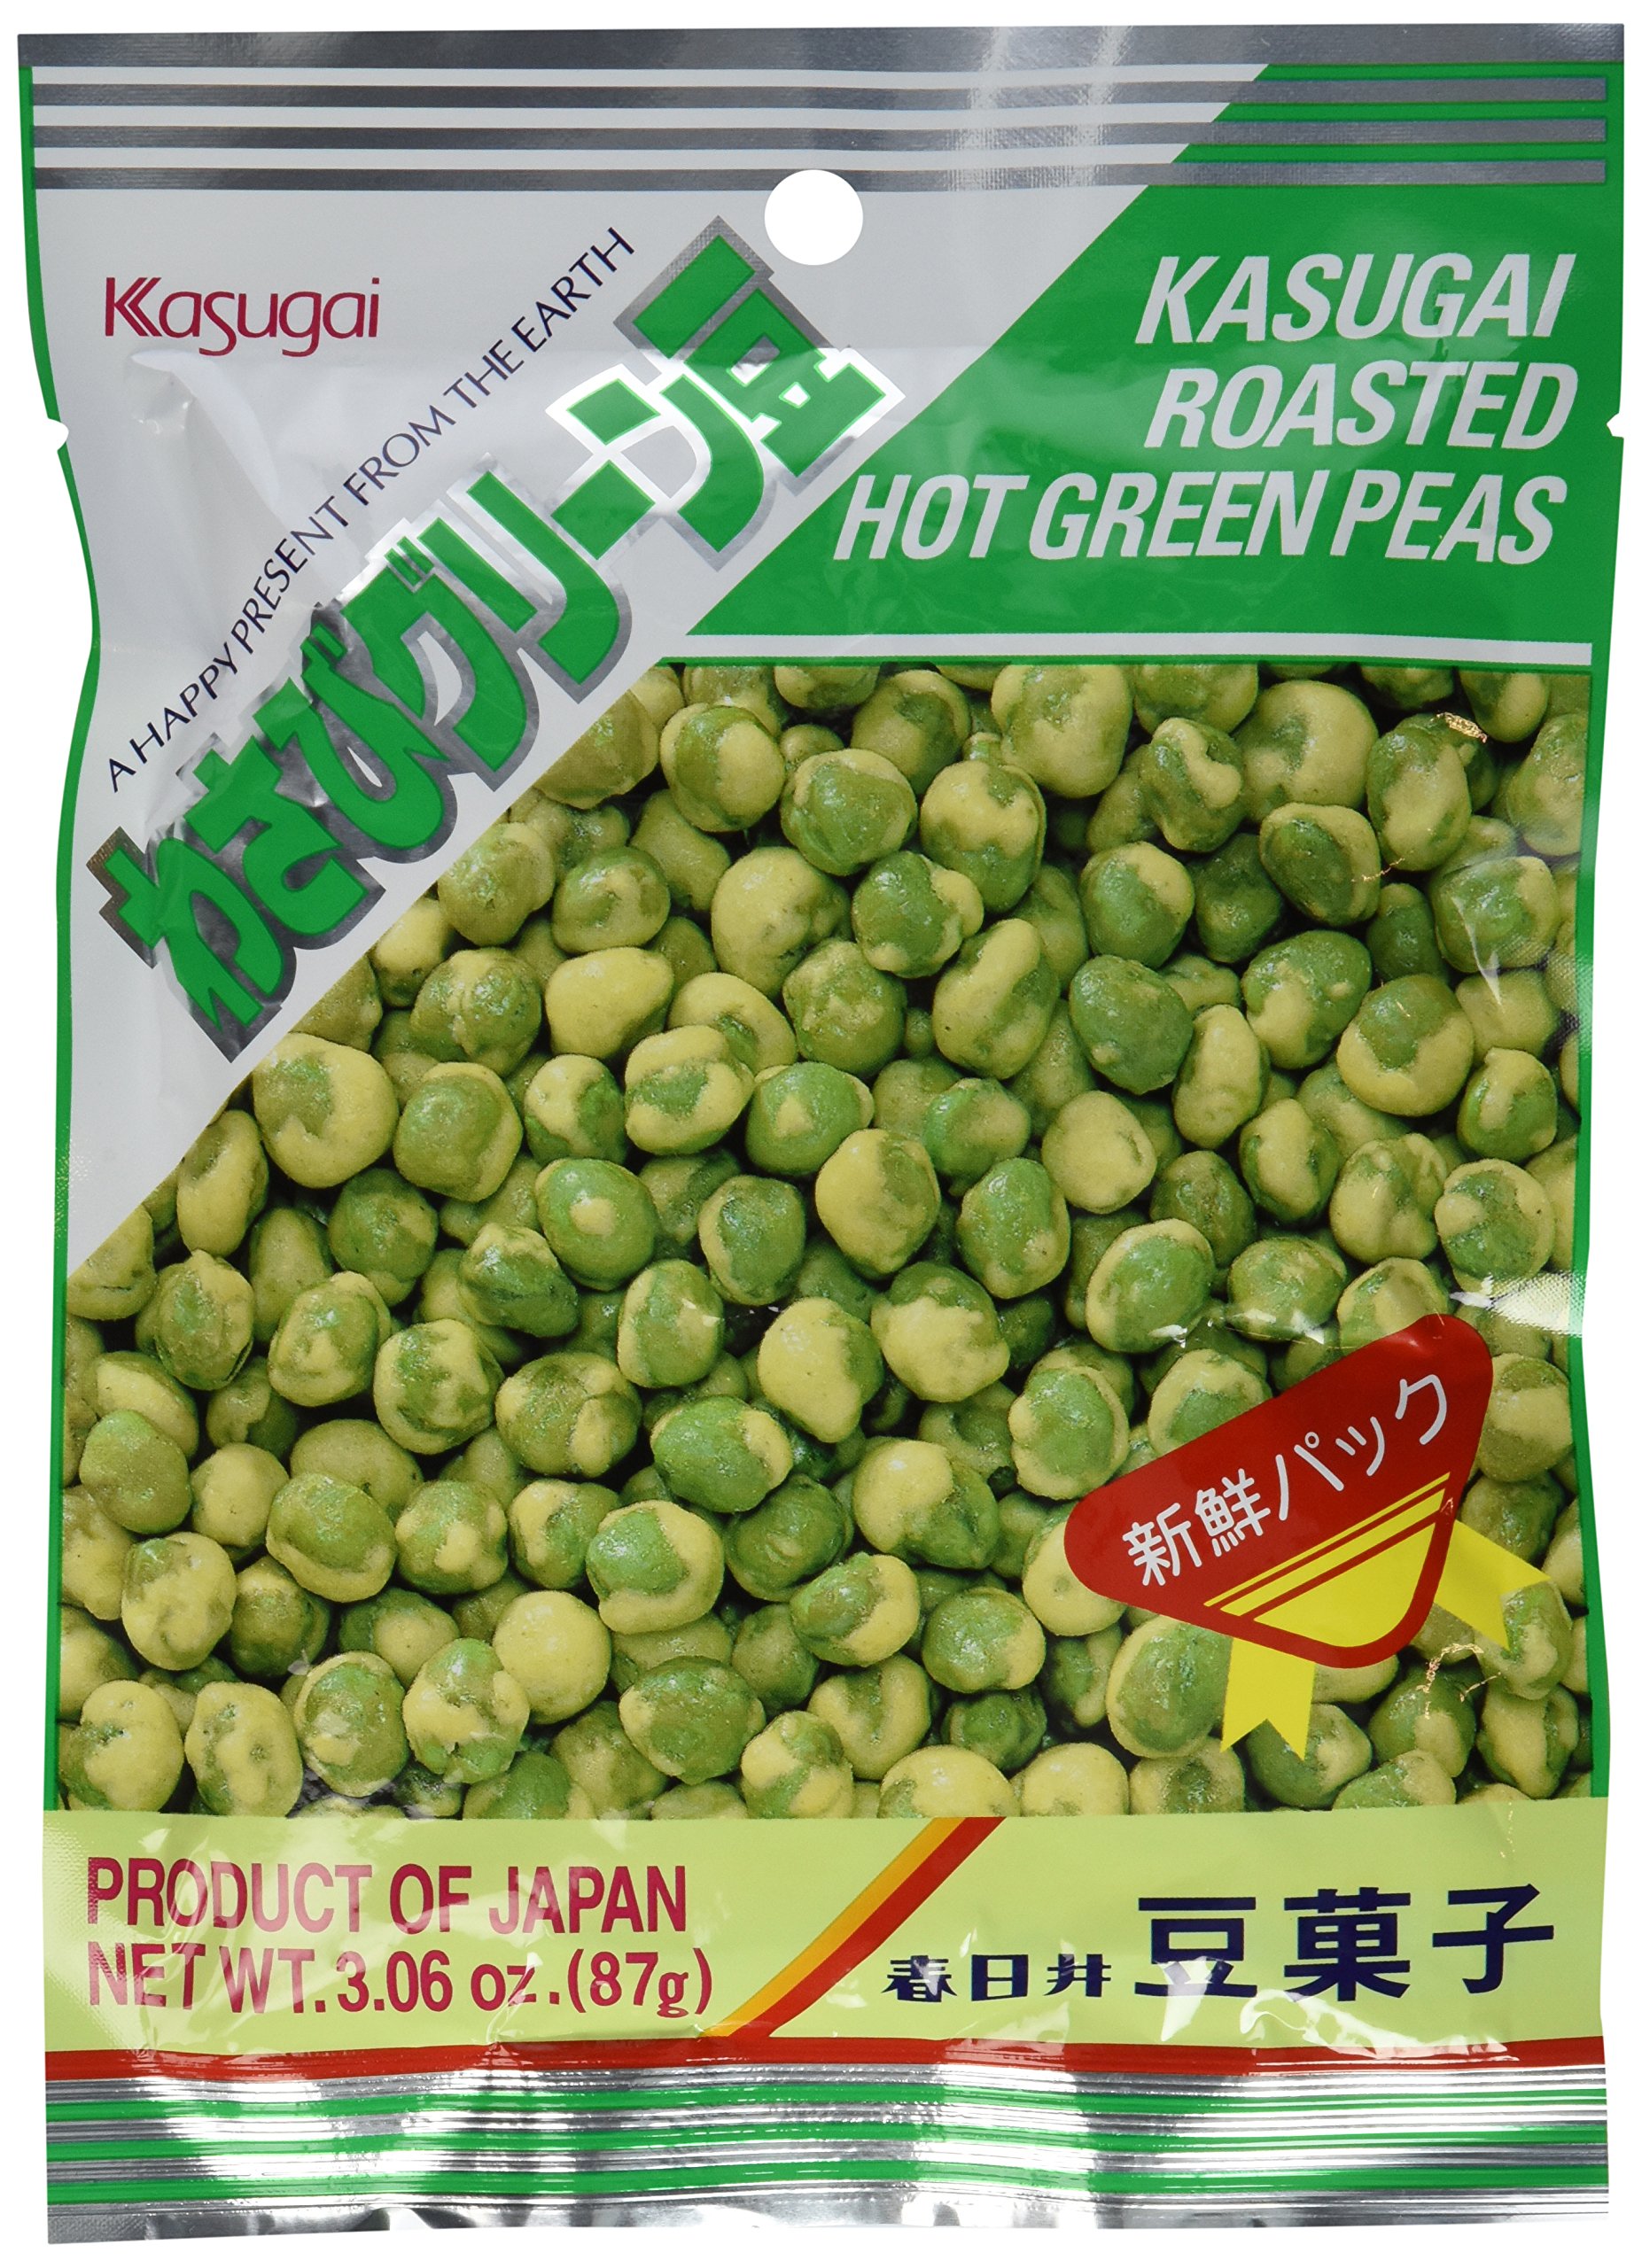 Kasugai Roasted Hot Wasabi Flavor Green Peas Japanese Import